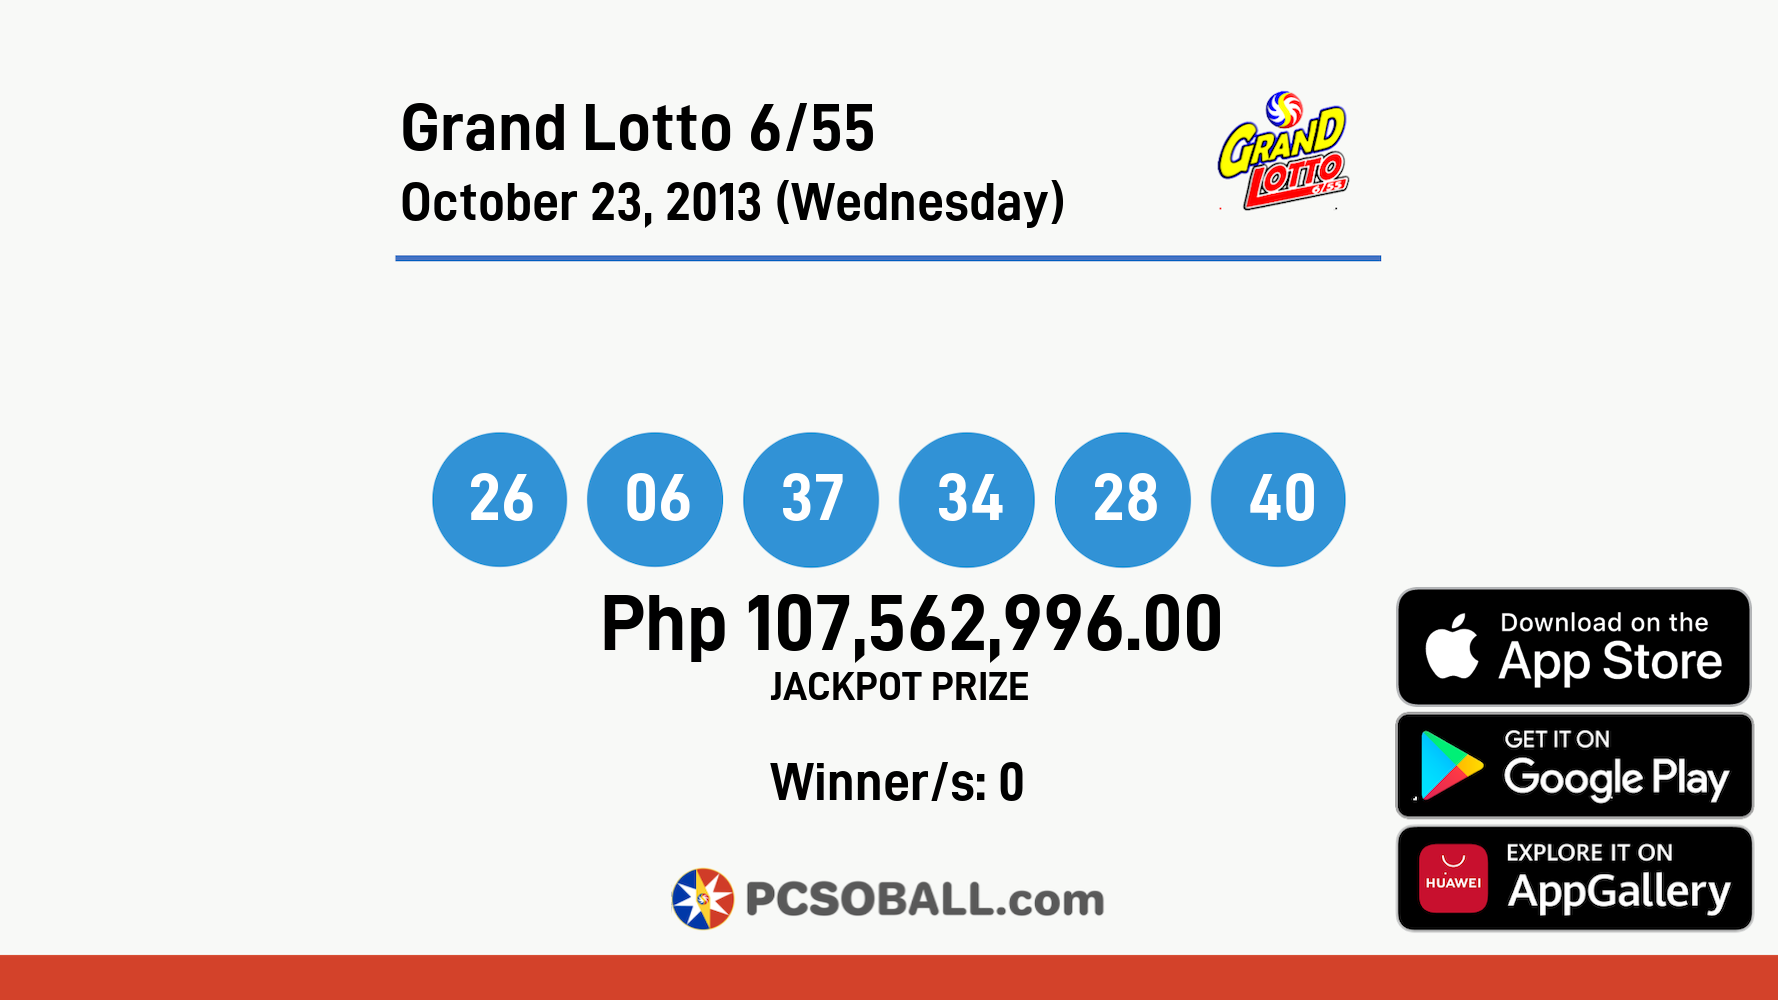 Grand Lotto 6/55 October 23, 2013 (Wednesday) Result